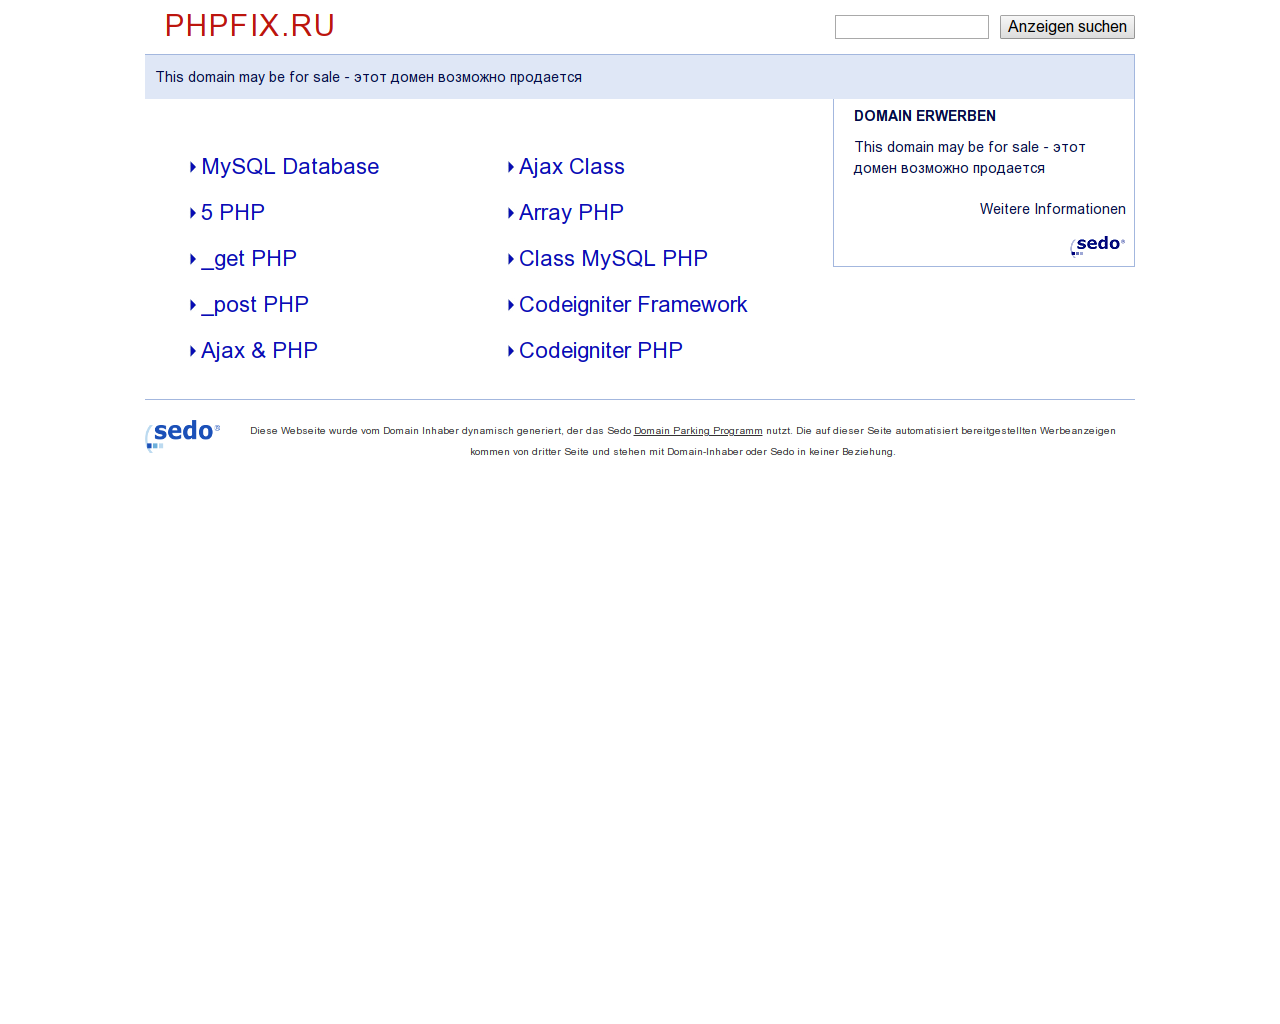 Изображение сайта phpfix.ru в разрешении 1280x1024